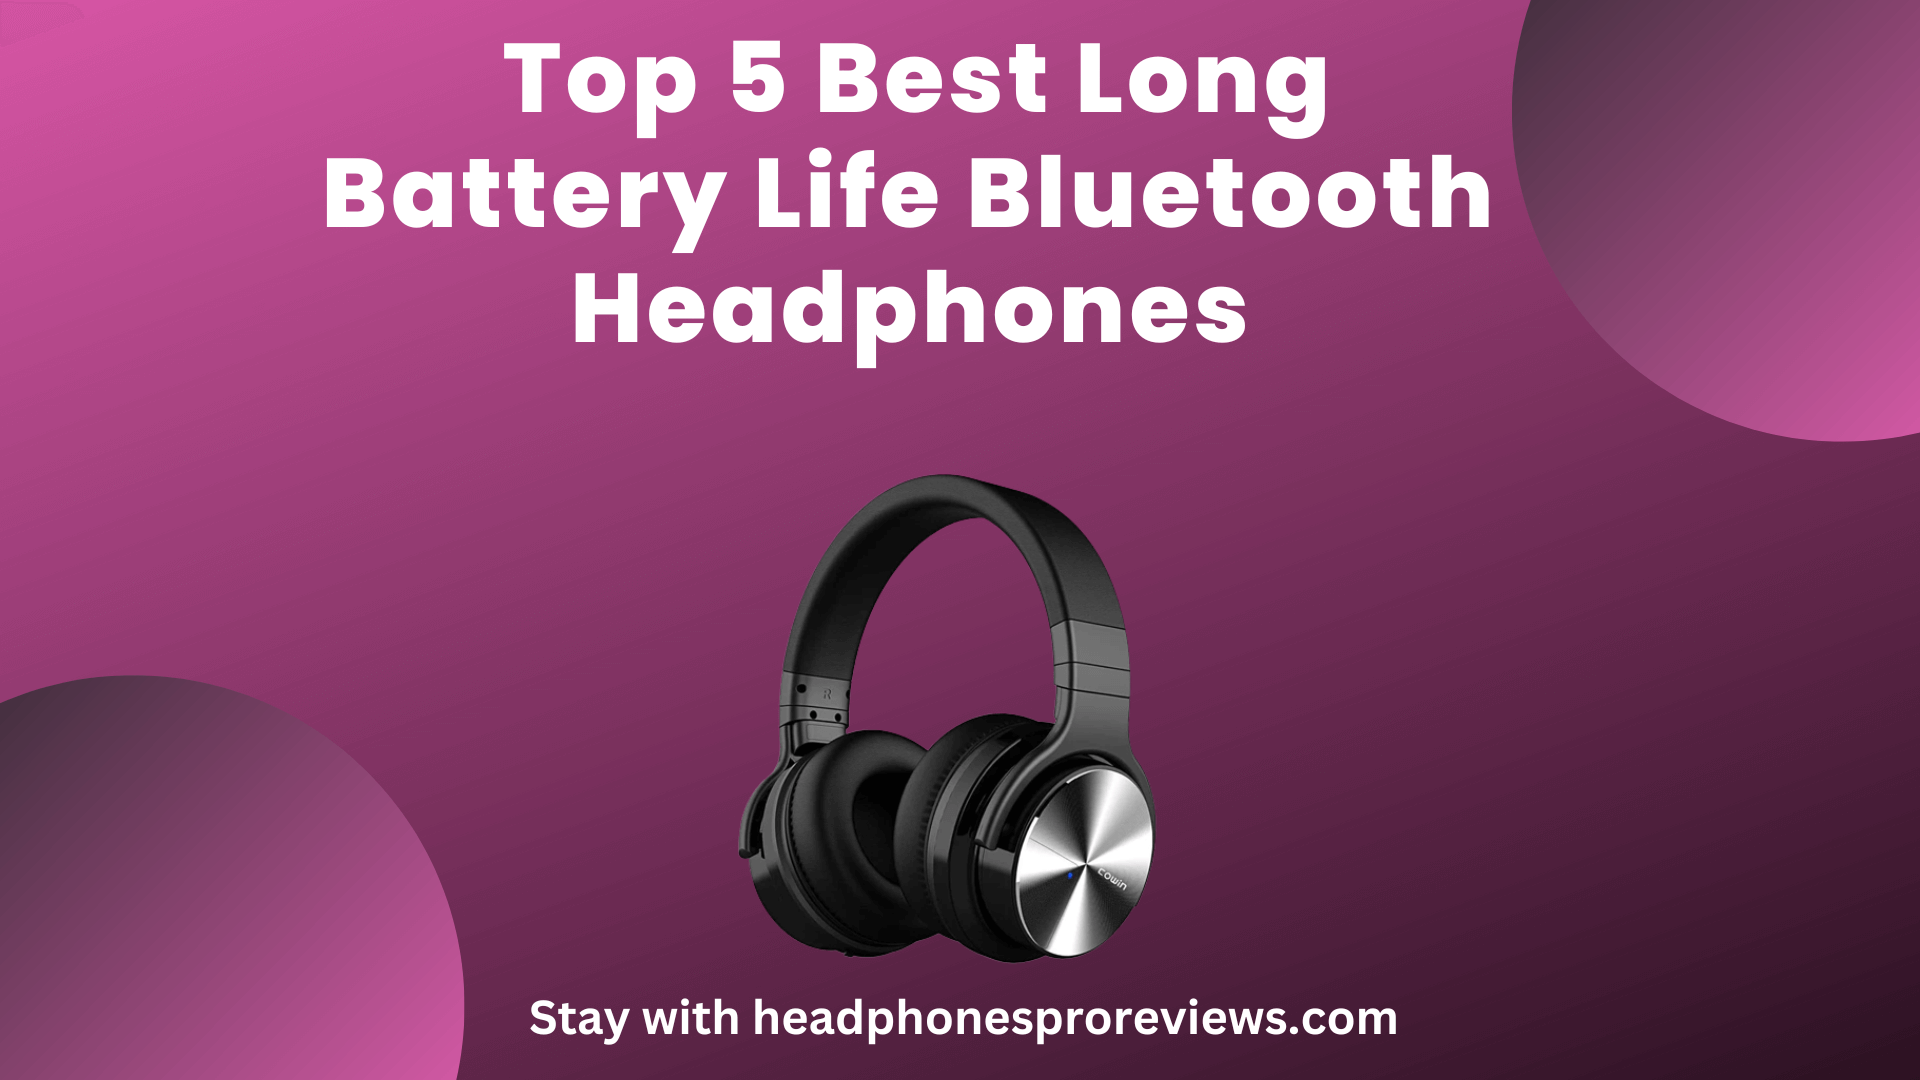 Long Battery Life Bluetooth Headphones